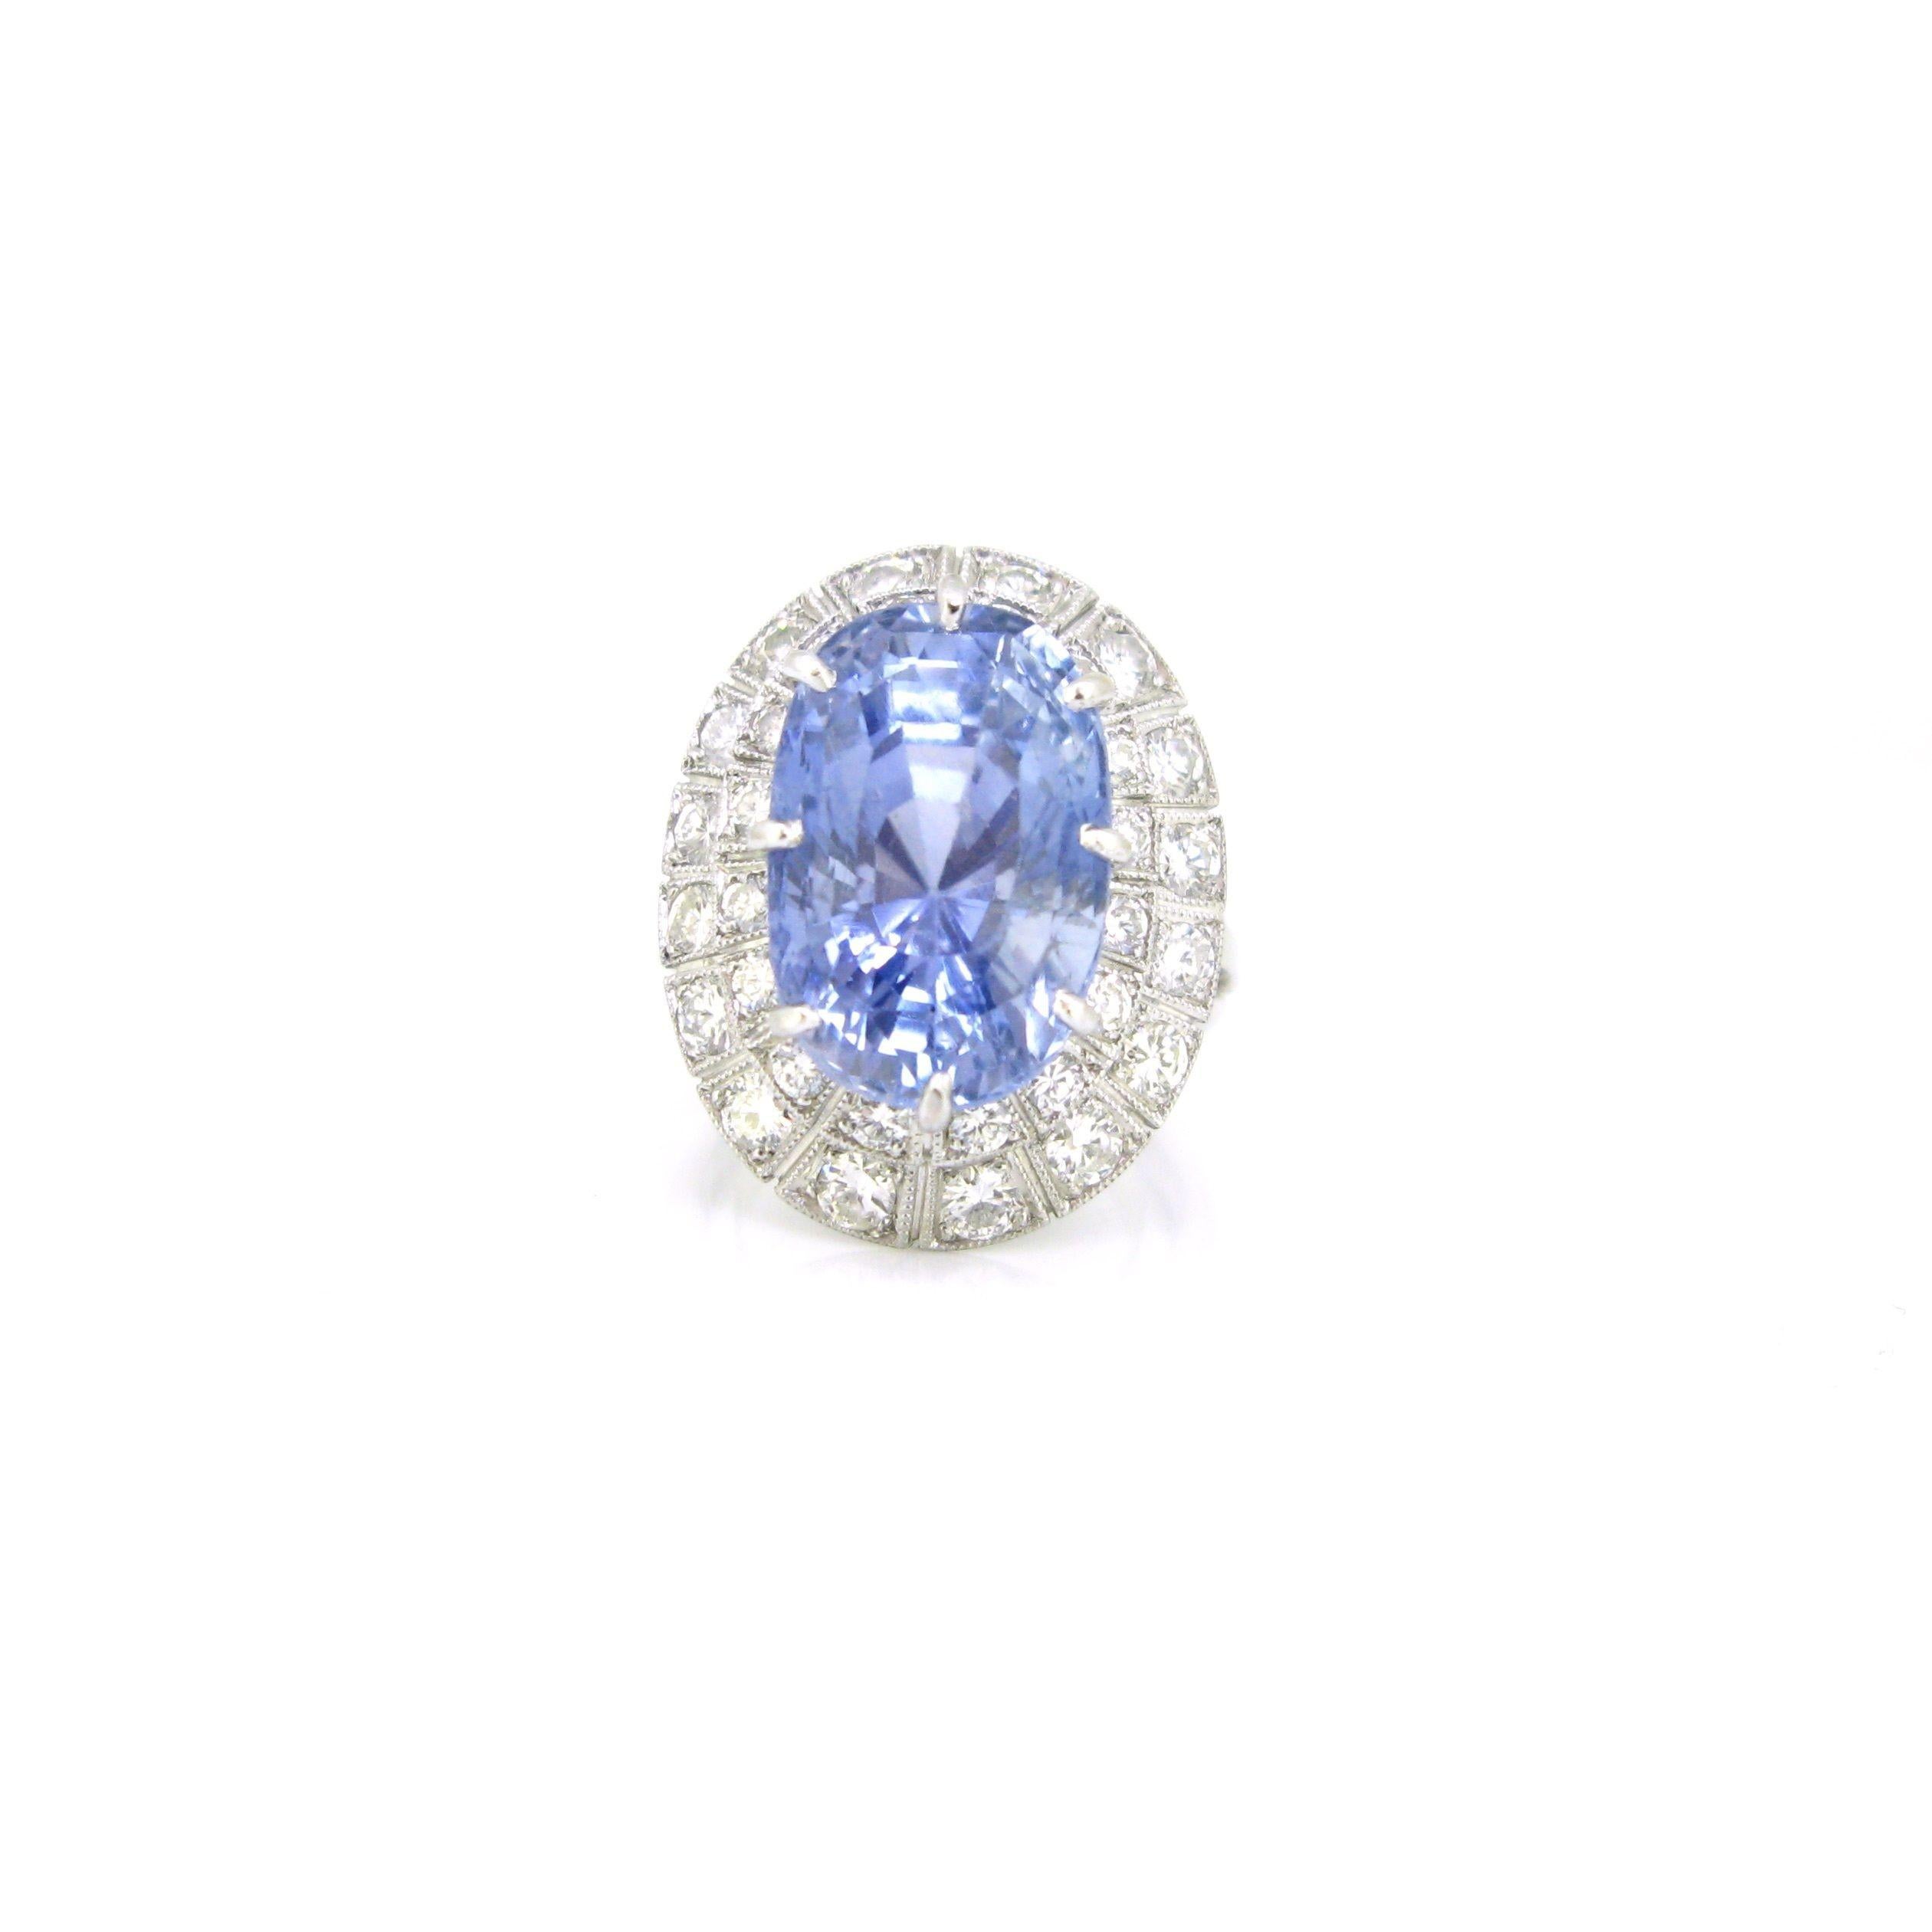 20ct Ceylon Natural Sapphire Diamonds Cluster Ring, Platinum, France, circa 1940 For Sale 2